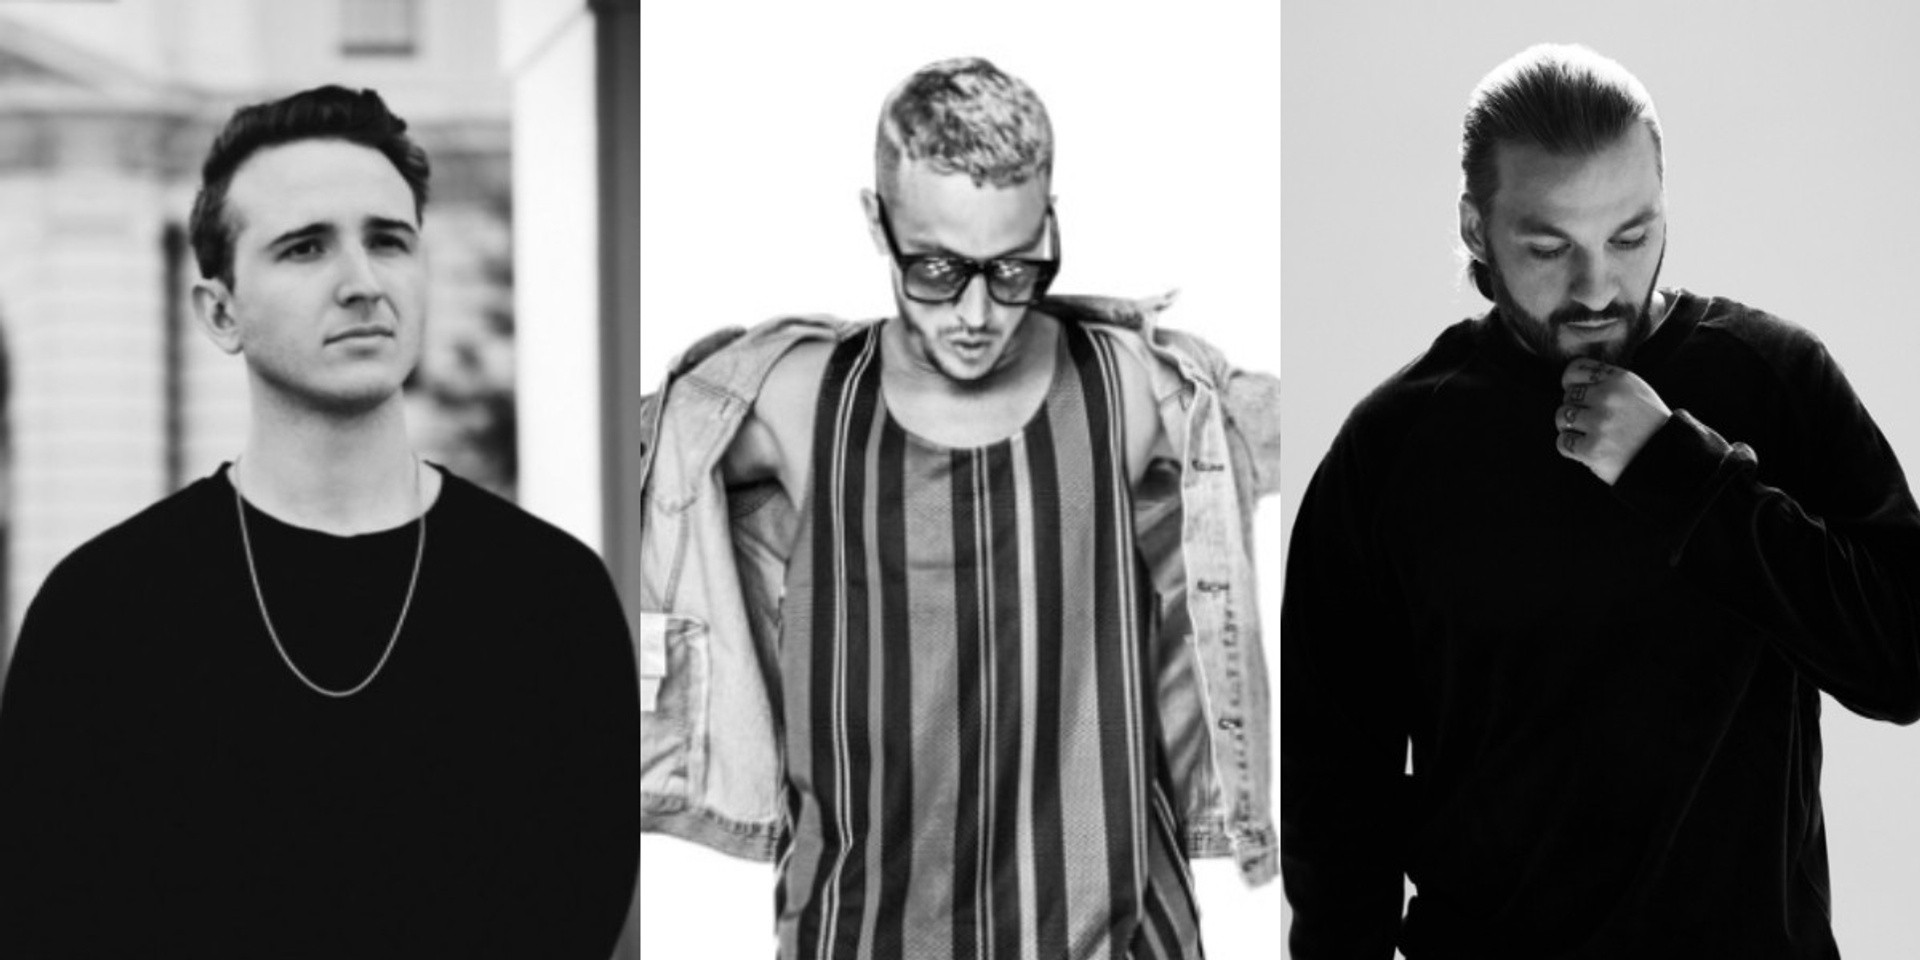 Ultra Singapore finally reveals line-up for 2018 festival – DJ SNAKE, RL Grime, Steve Angello and more